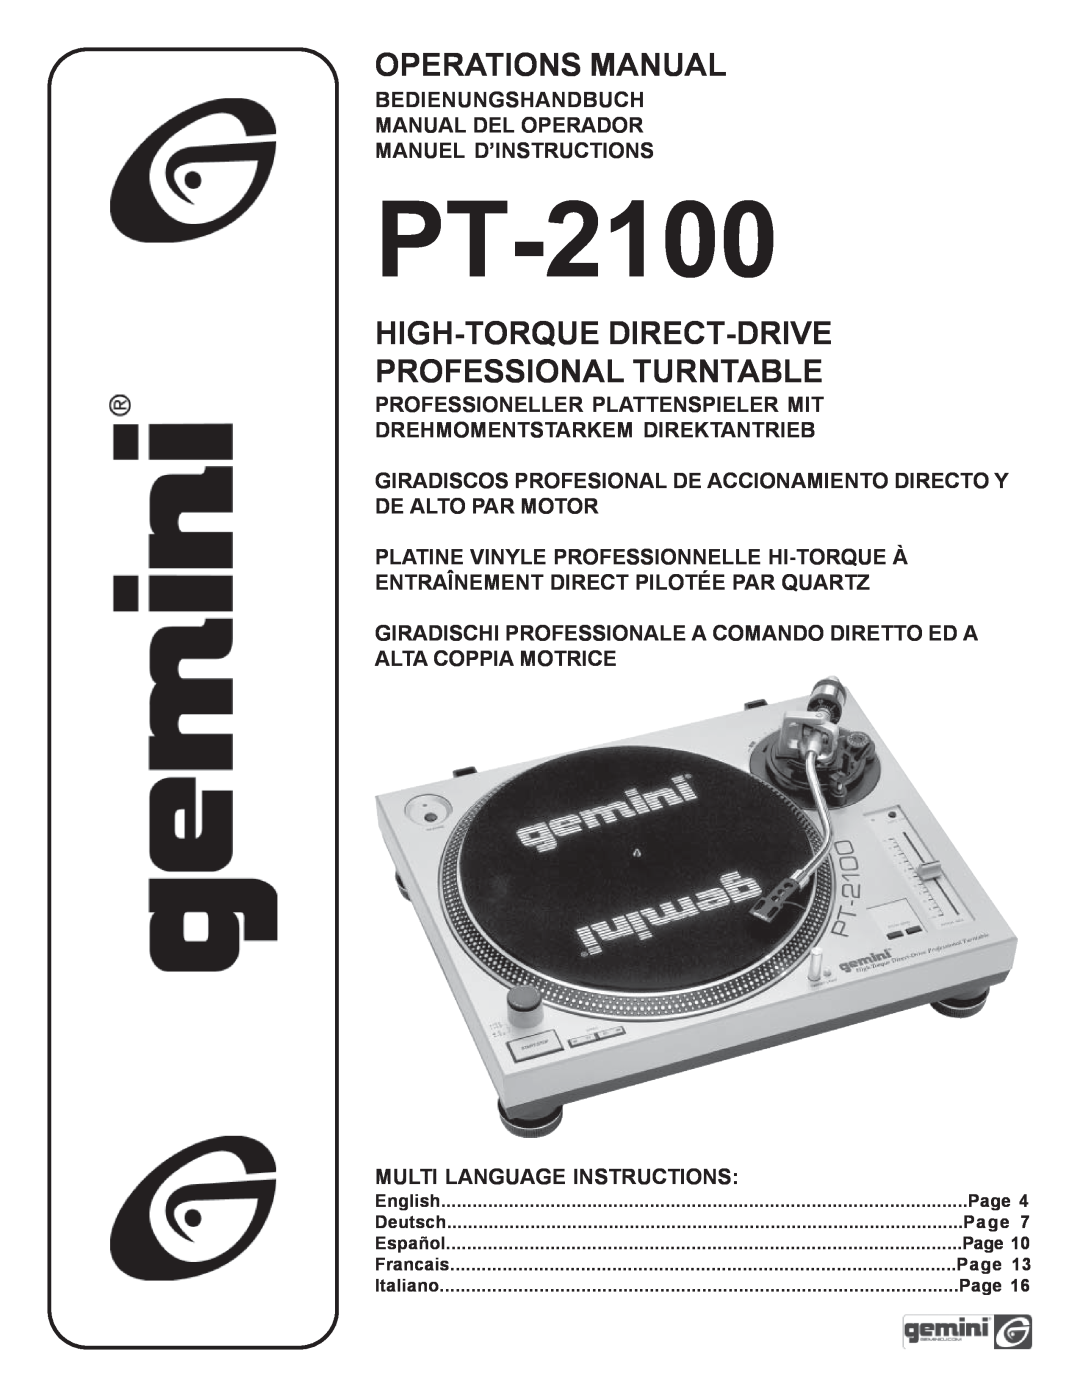 Gemini PT 2100 manual PT-2100, Operations Manual, High-Torque Direct-Drive Professional Turntable 